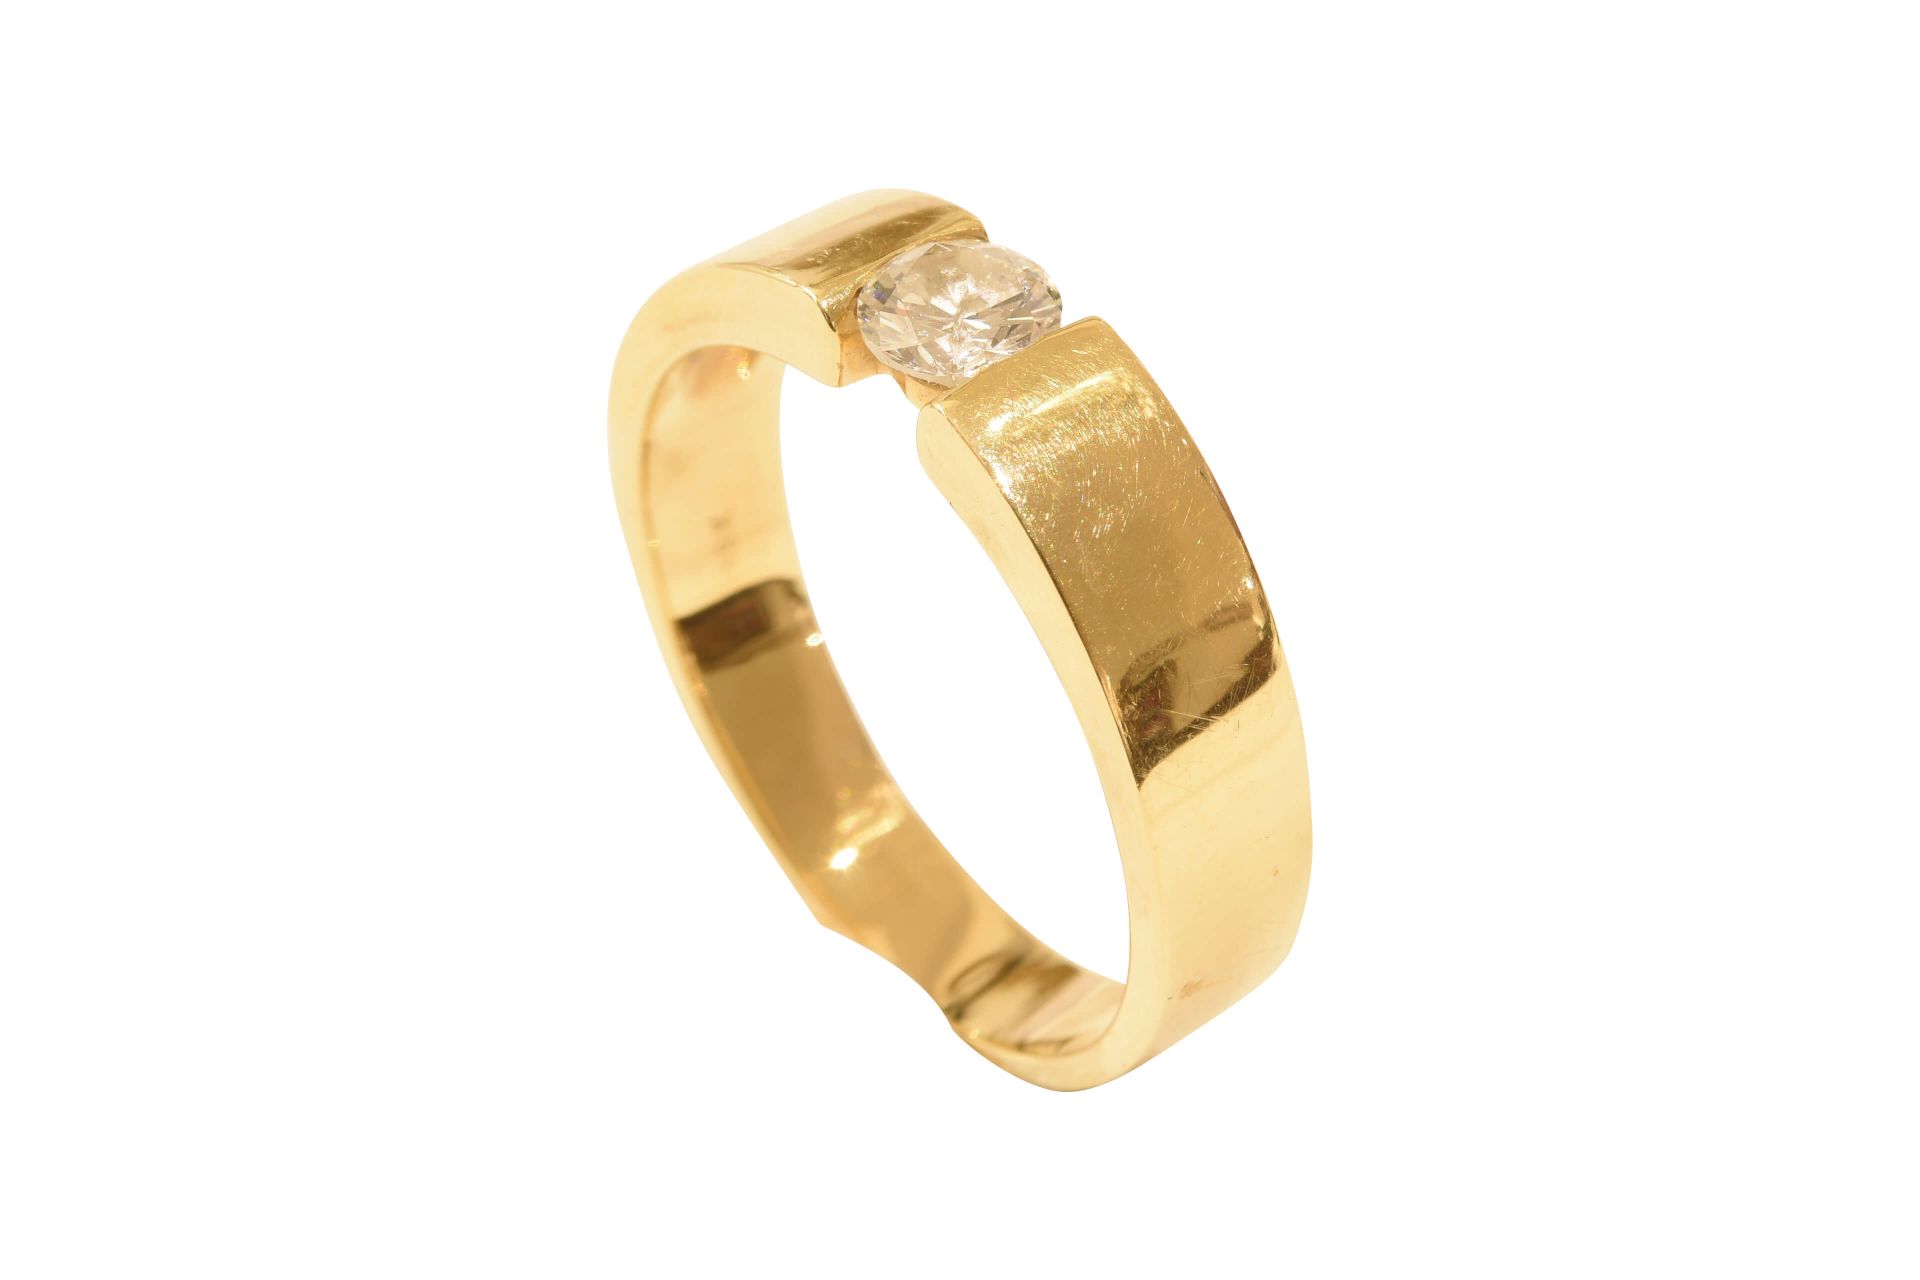 Ring GG mit einem Brillanten|Ring with one Brilliant-Cut Diamond - Image 2 of 5